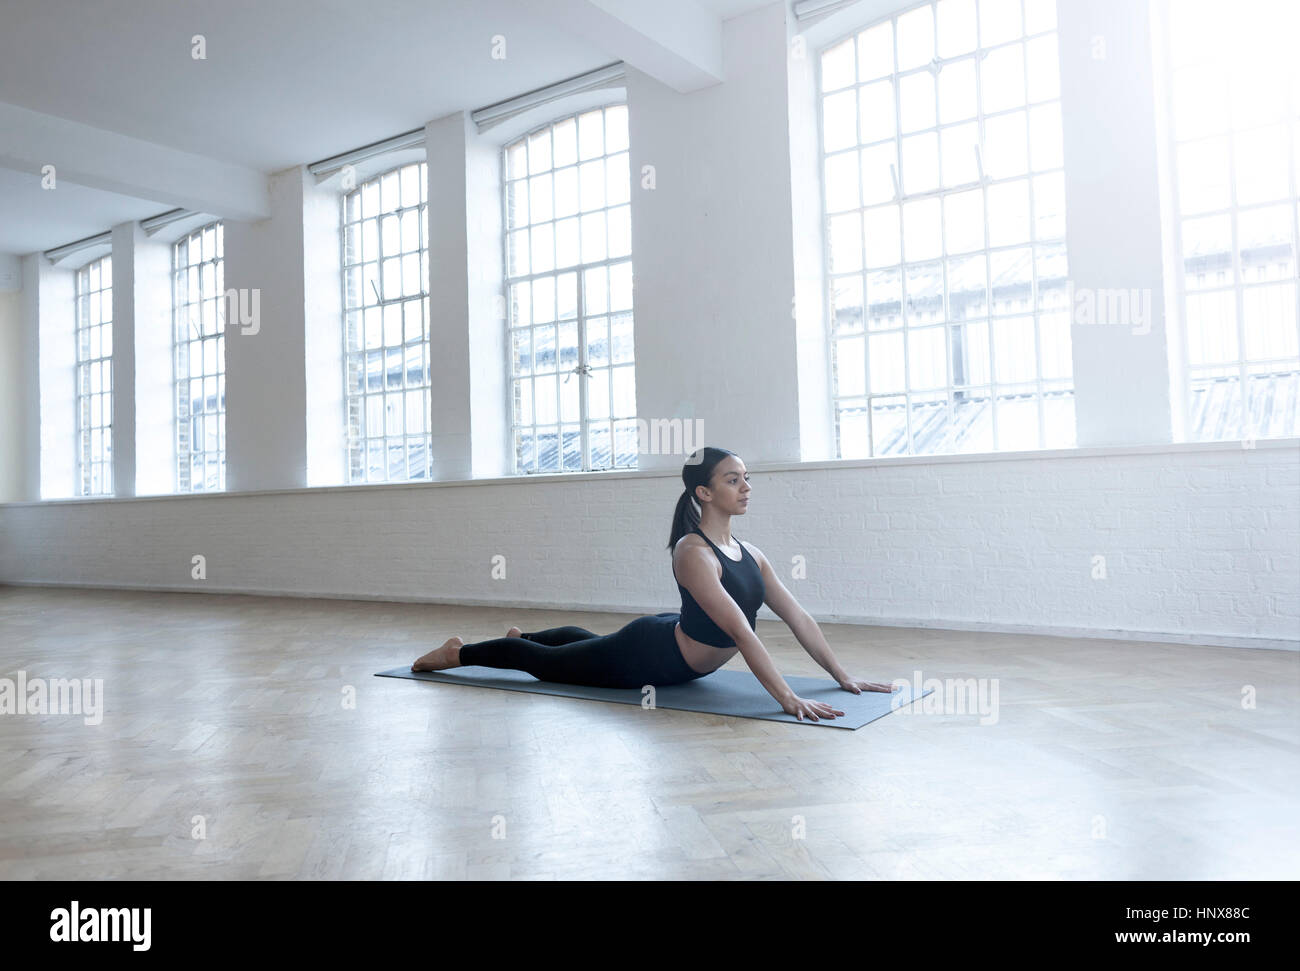 Woman in dance studio in yoga position Stock Photo